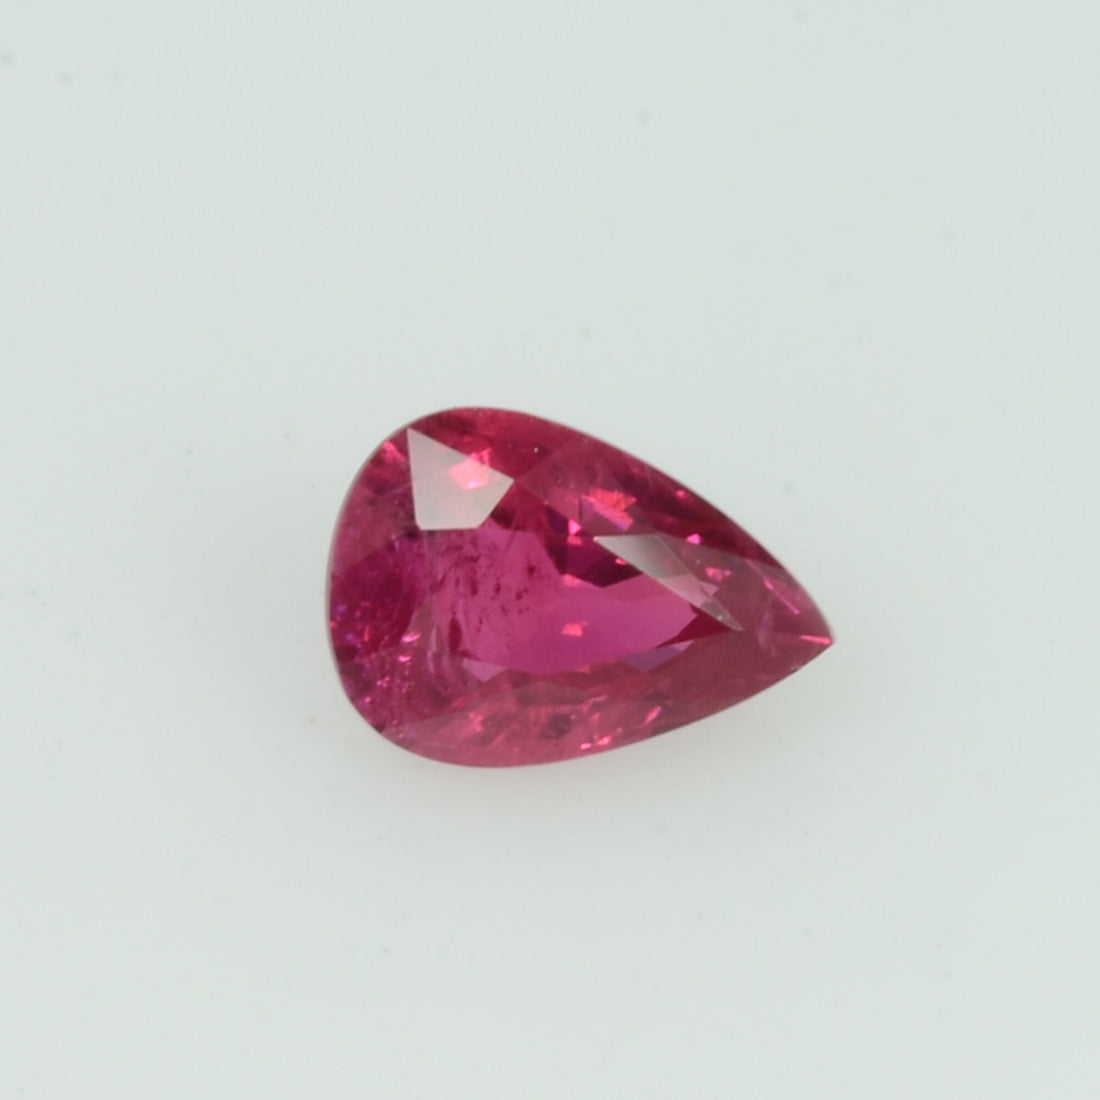 0.44 cts Natural Vietnam Ruby Loose Gemstone Pear Cut